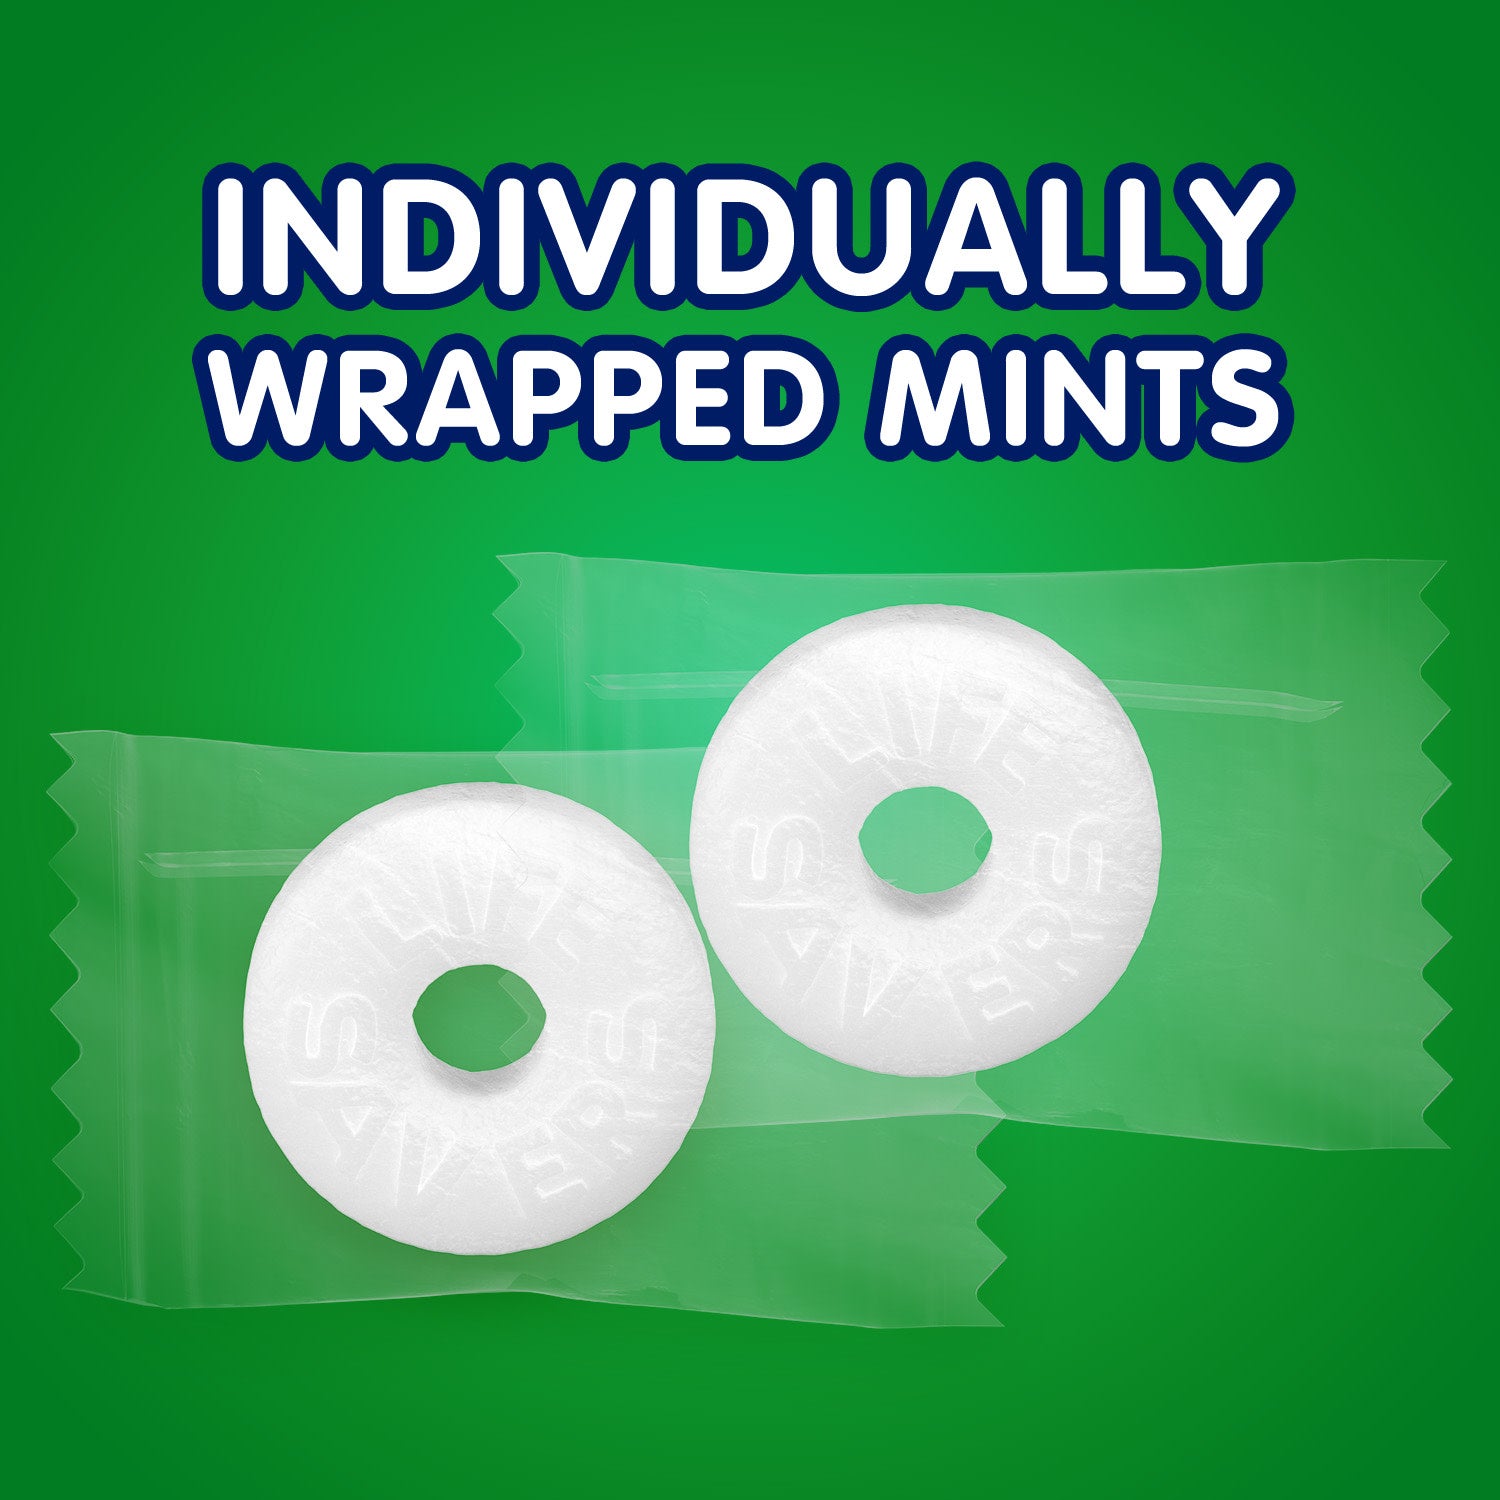 Life Savers Wint-O-Green Breath Mints Hard Candy - 6.25 oz Bag